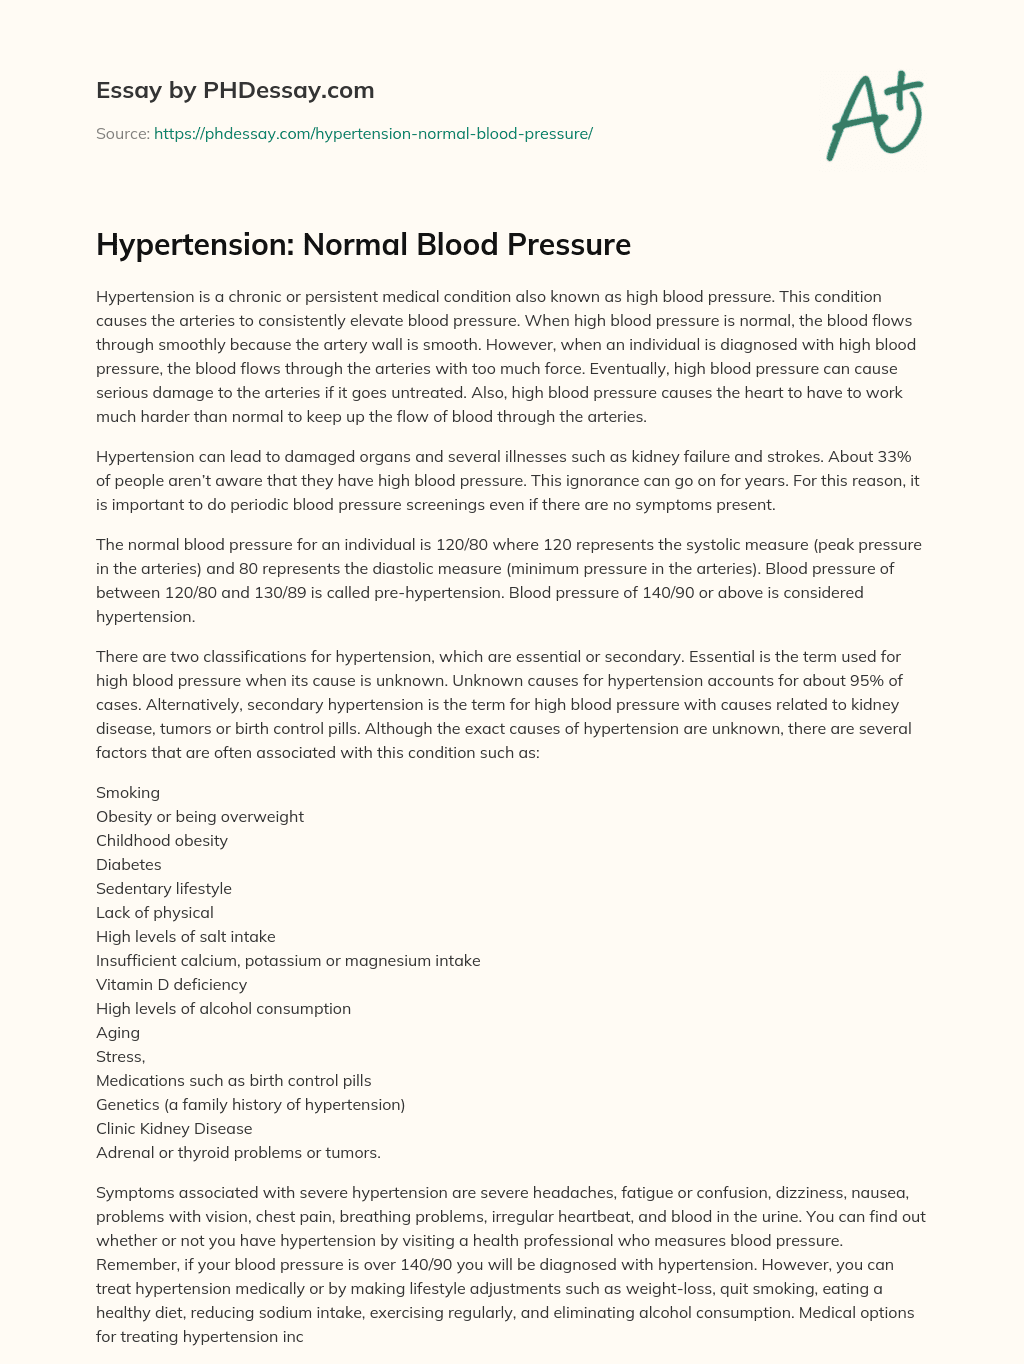 Hypertension: Normal Blood Pressure essay